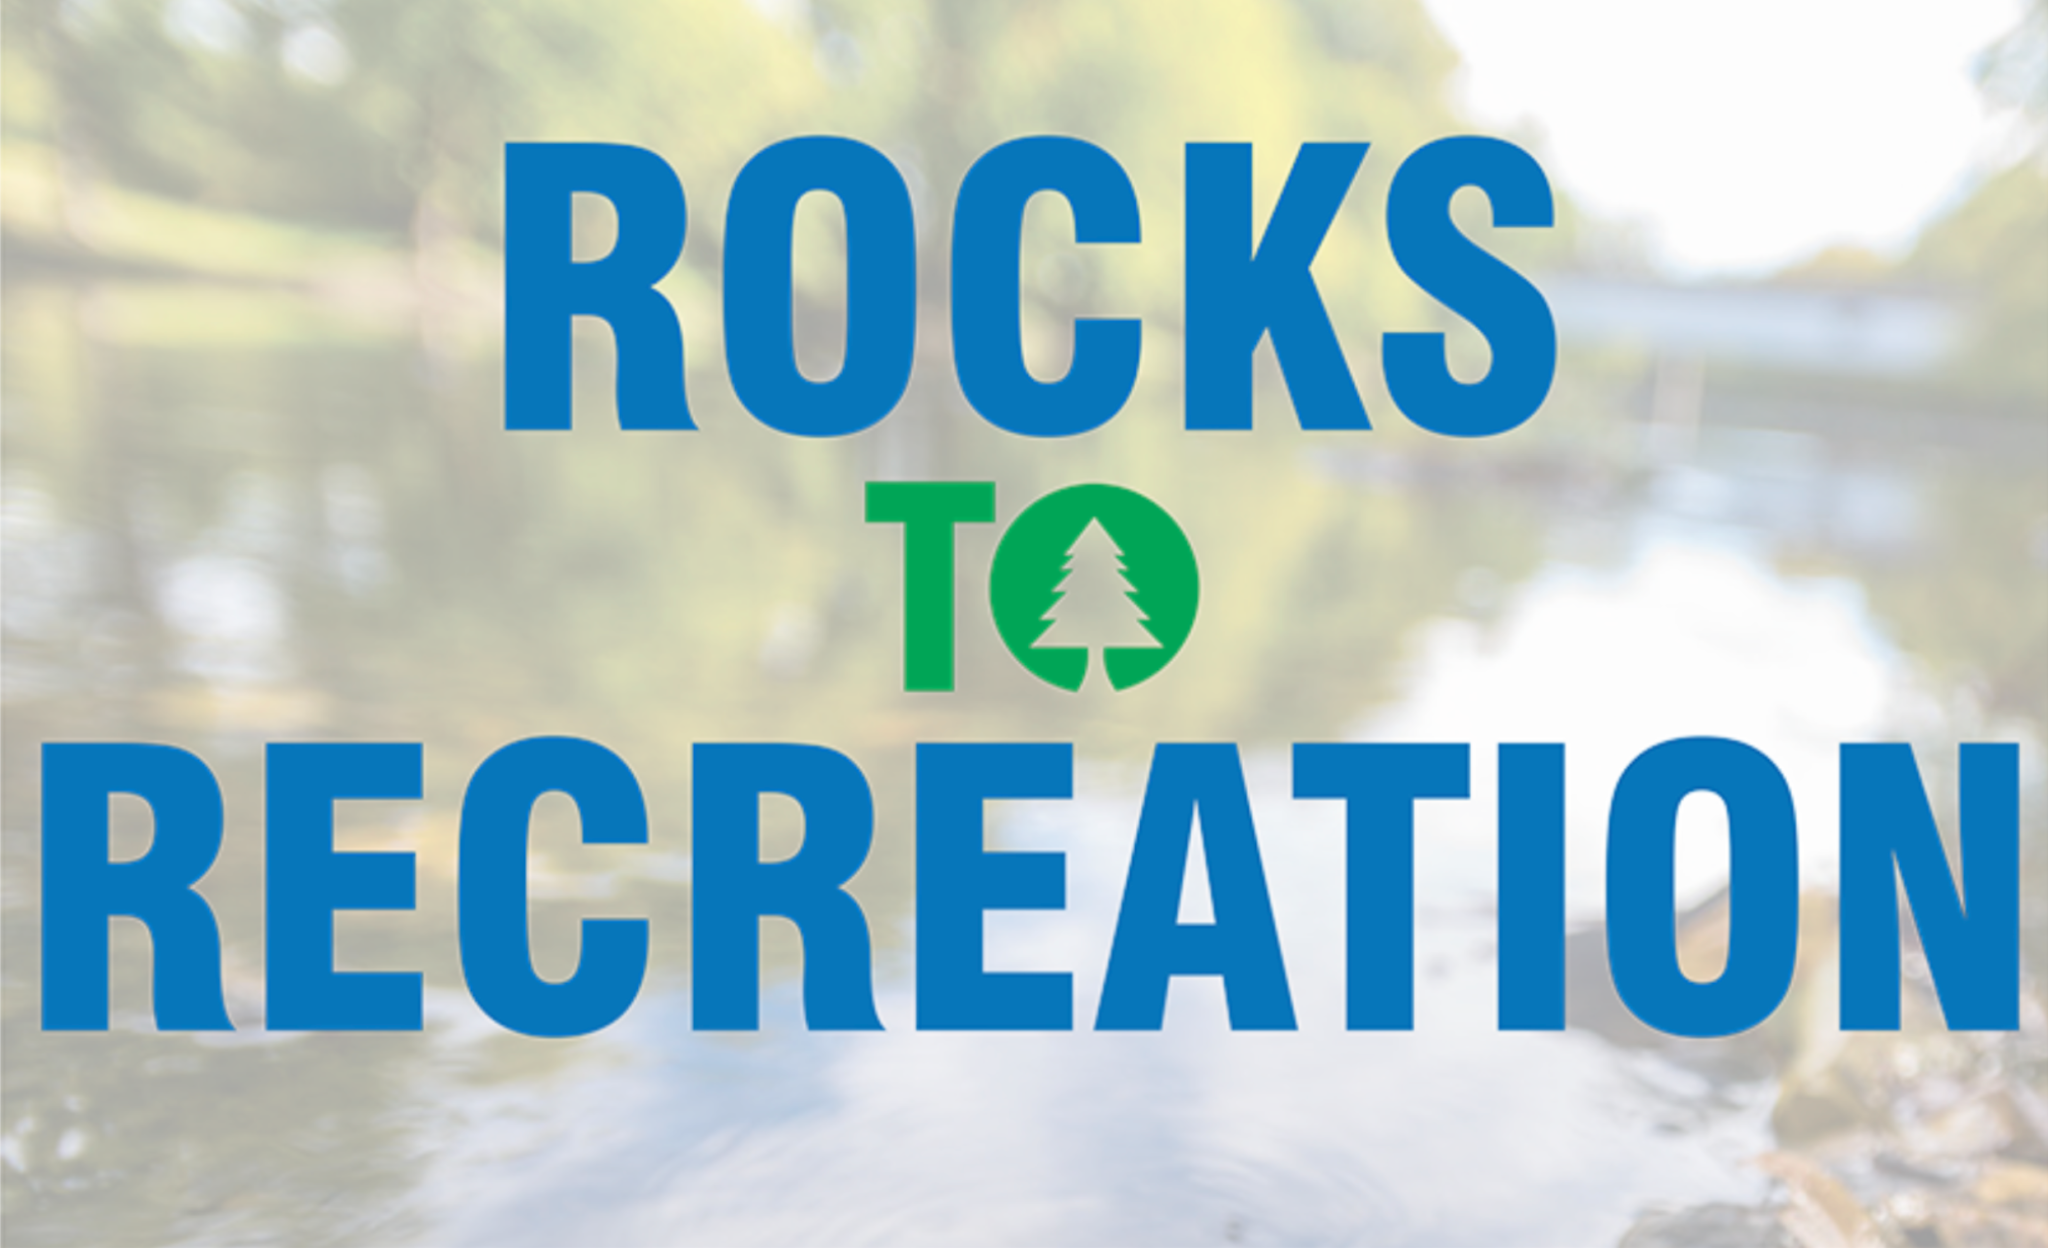 Rocks to Recreation